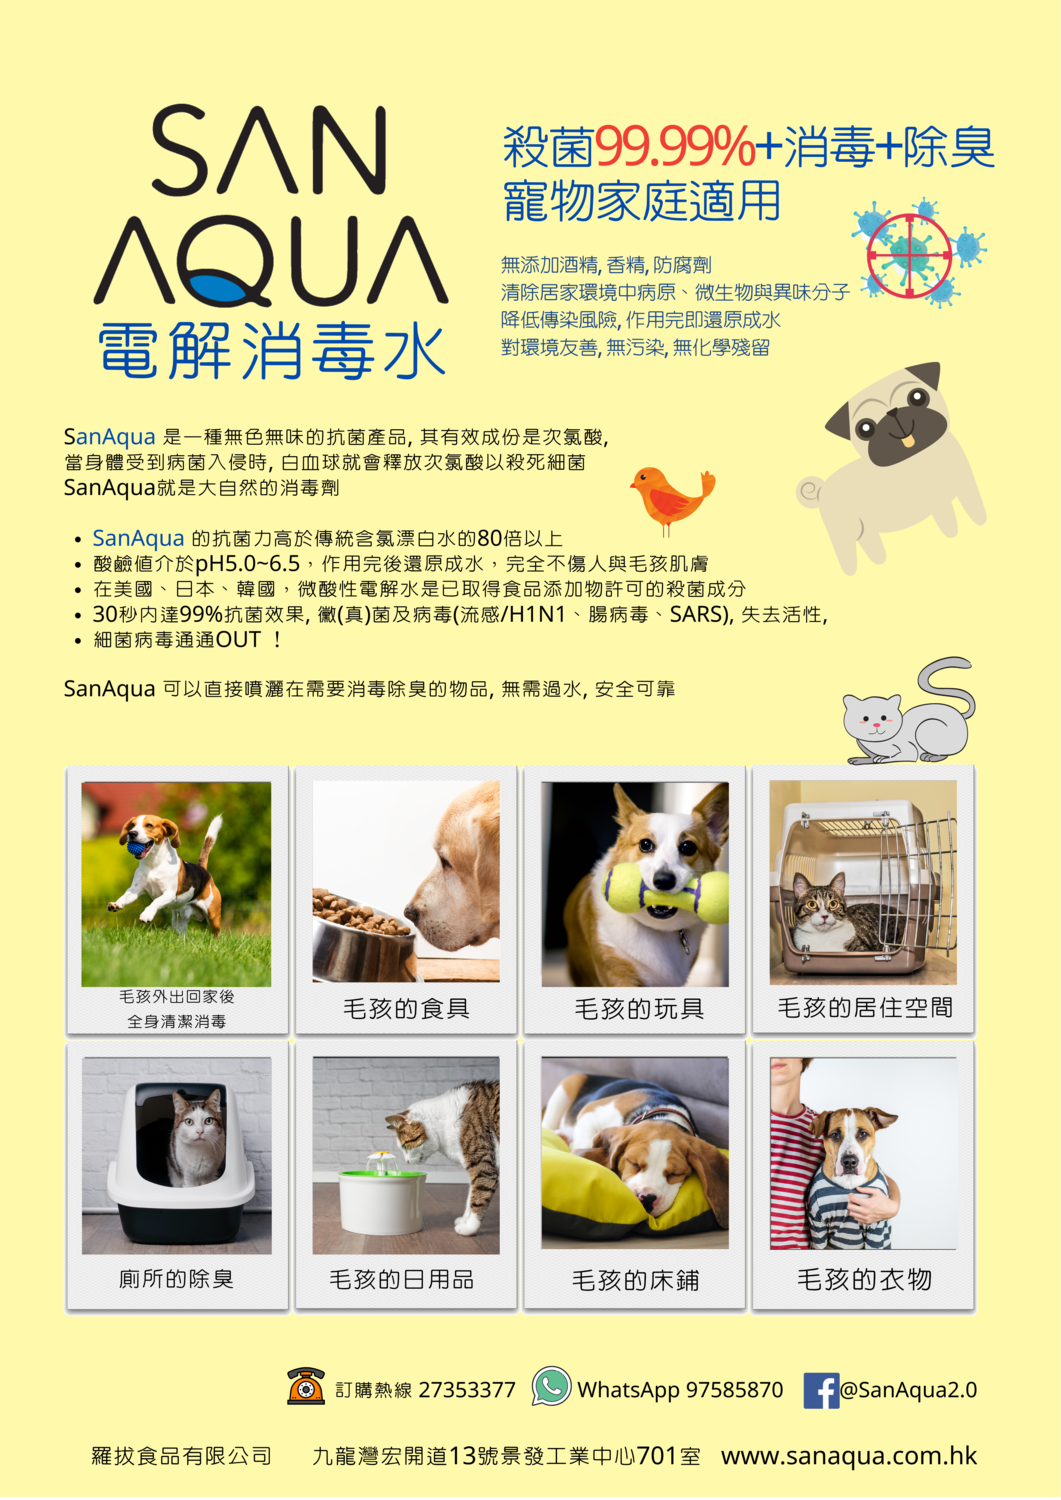 SanAqua 電解消毒水寵物應用篇

SanAqua Applications on Pets